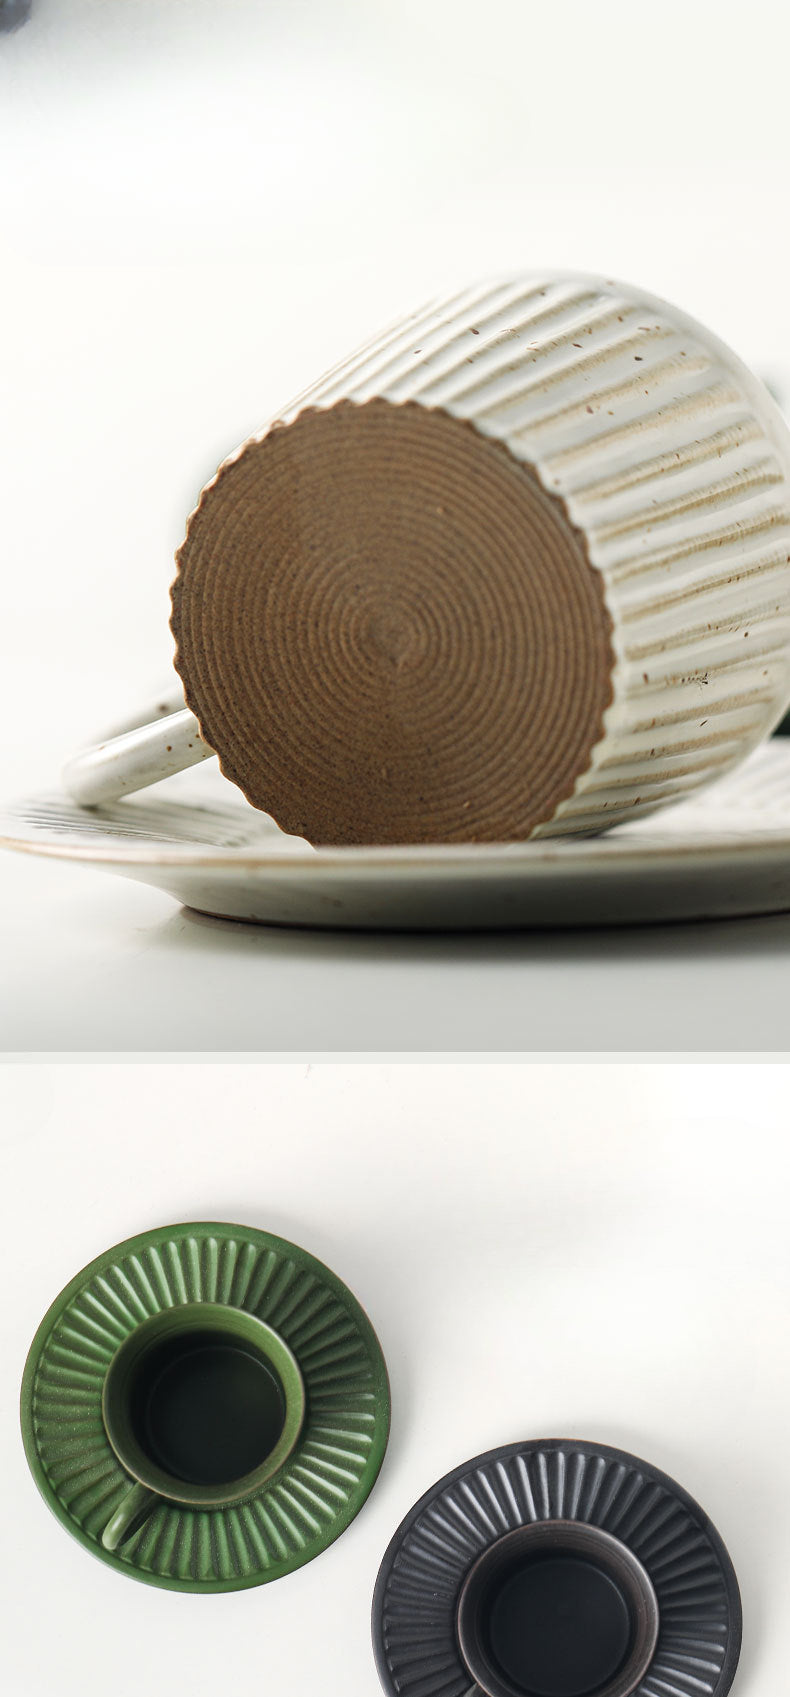 Gohobi Handmade Vintage Japanese Stoneware Coffee Mug and Saucer Set